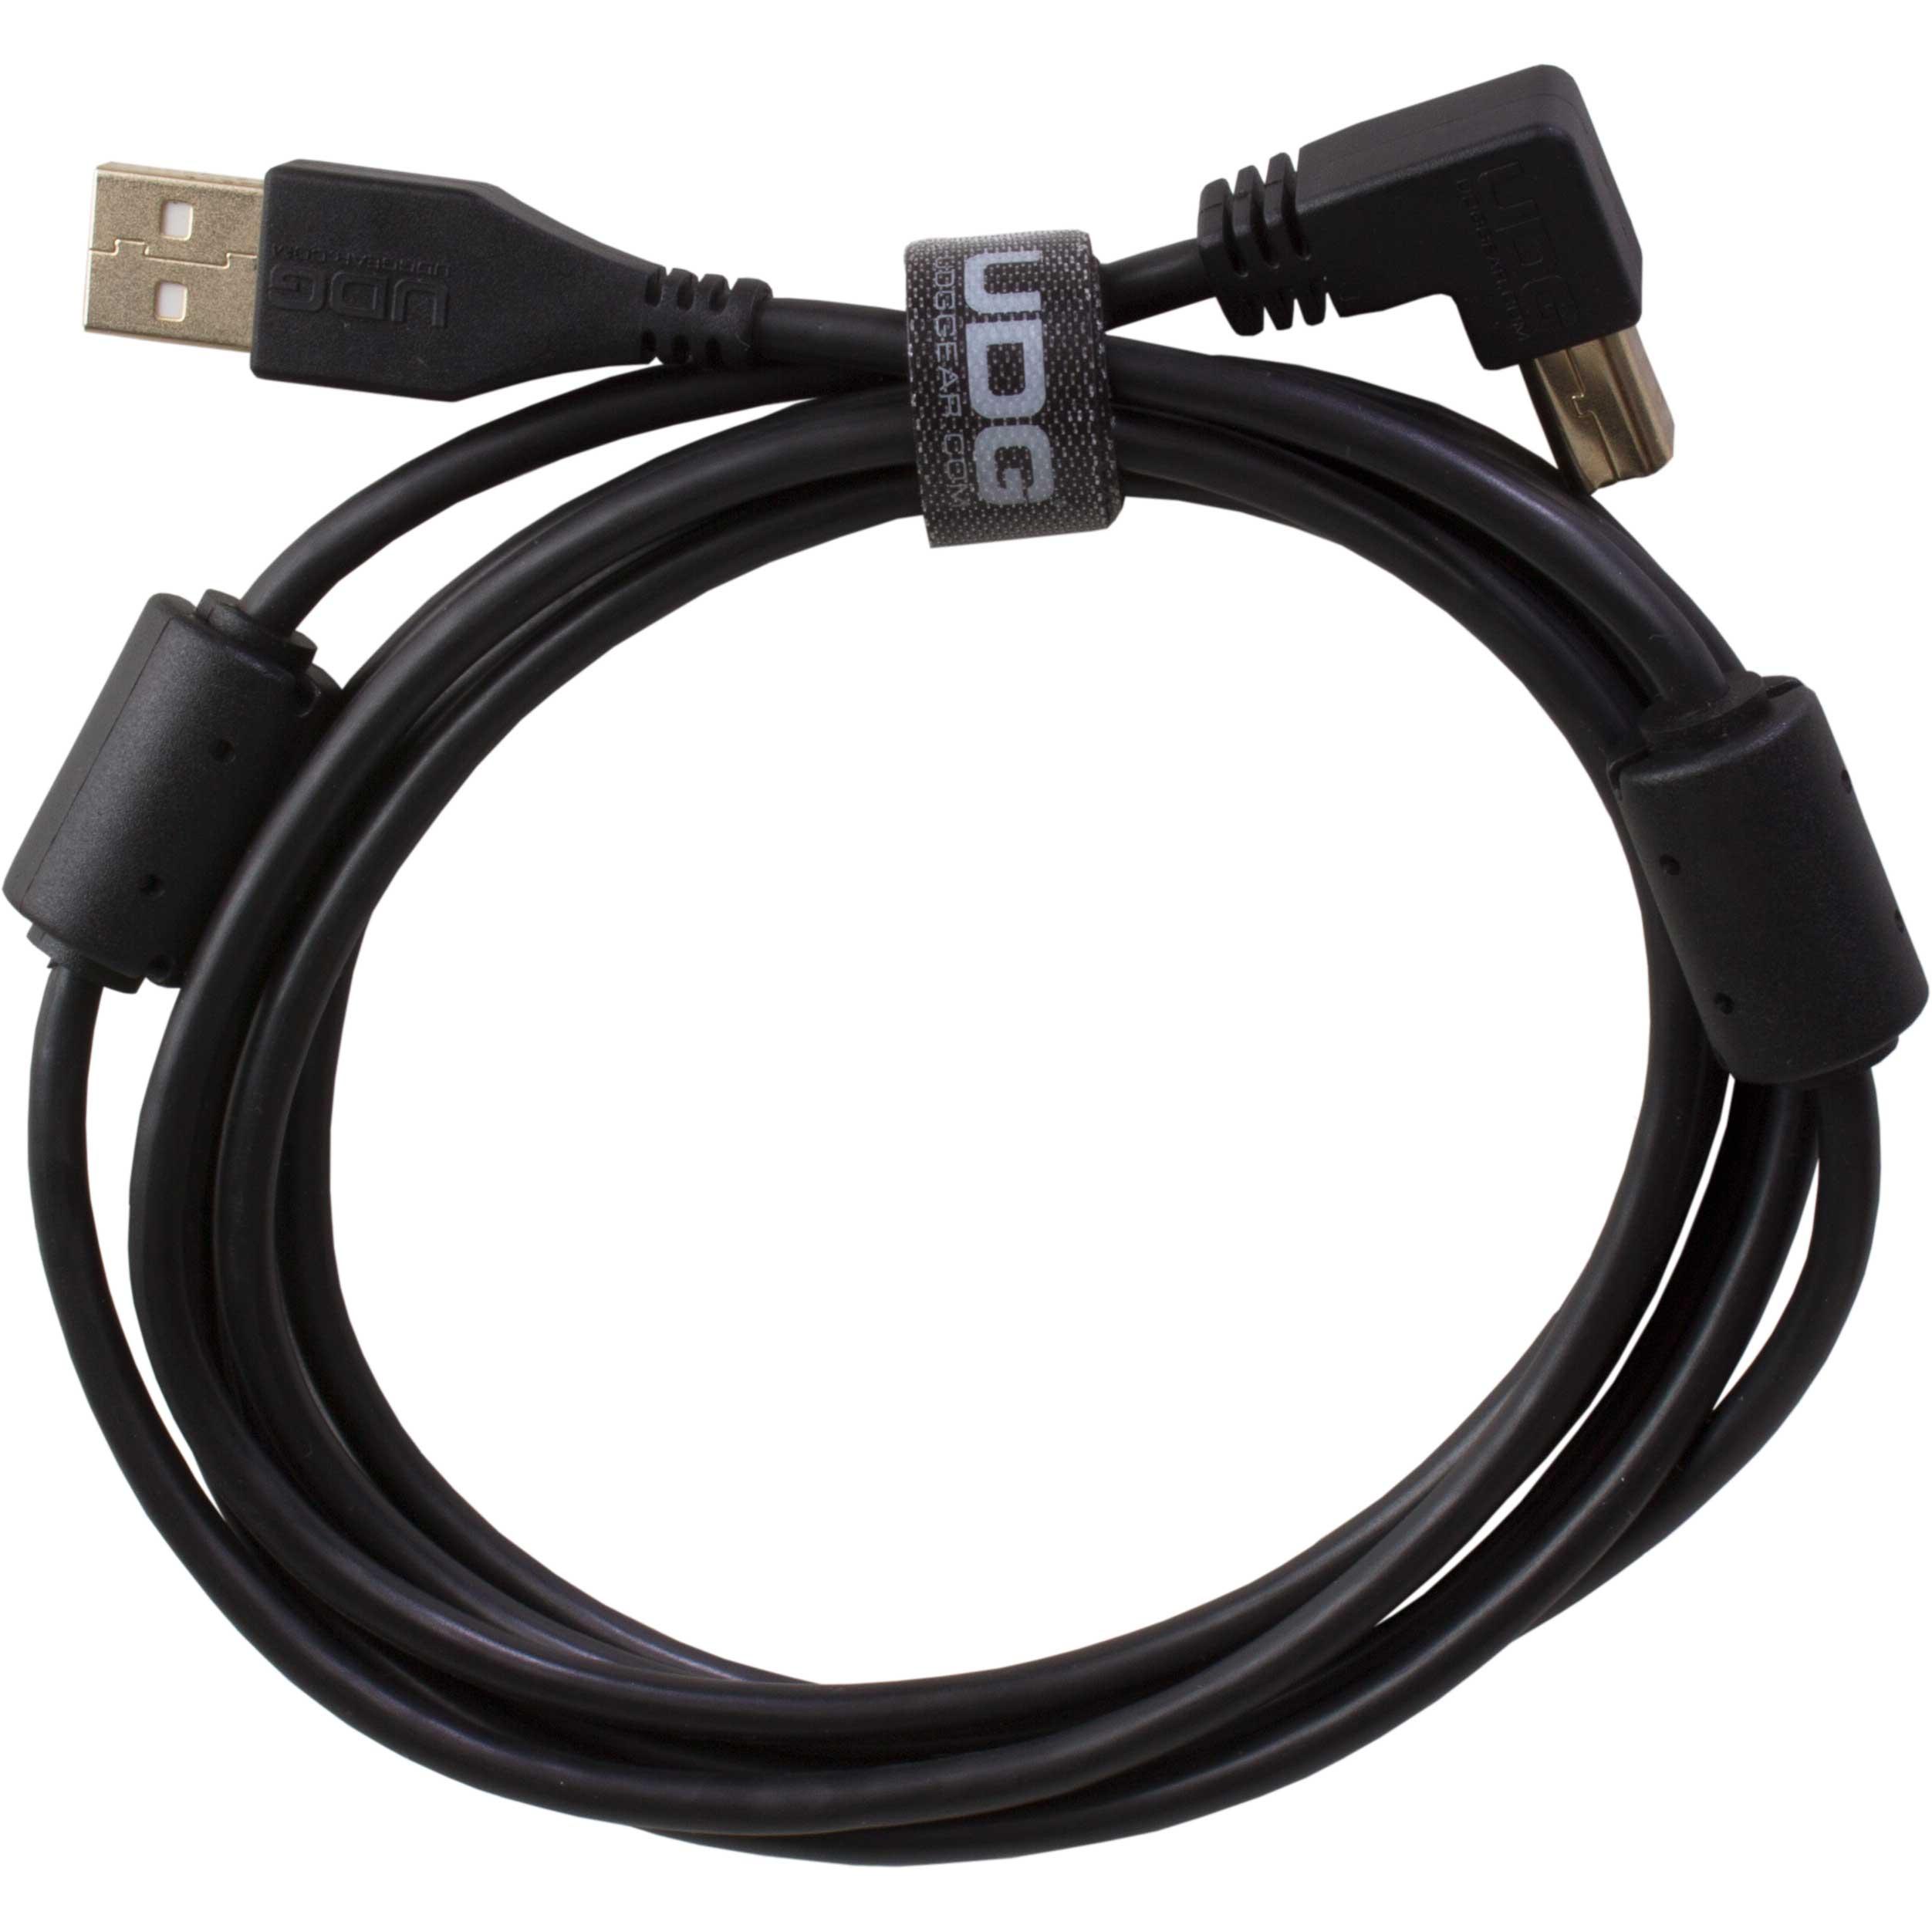 UDG U95005BL - ULTIMATE AUDIO CABLE USB 2.0 A-B BLACK 2M